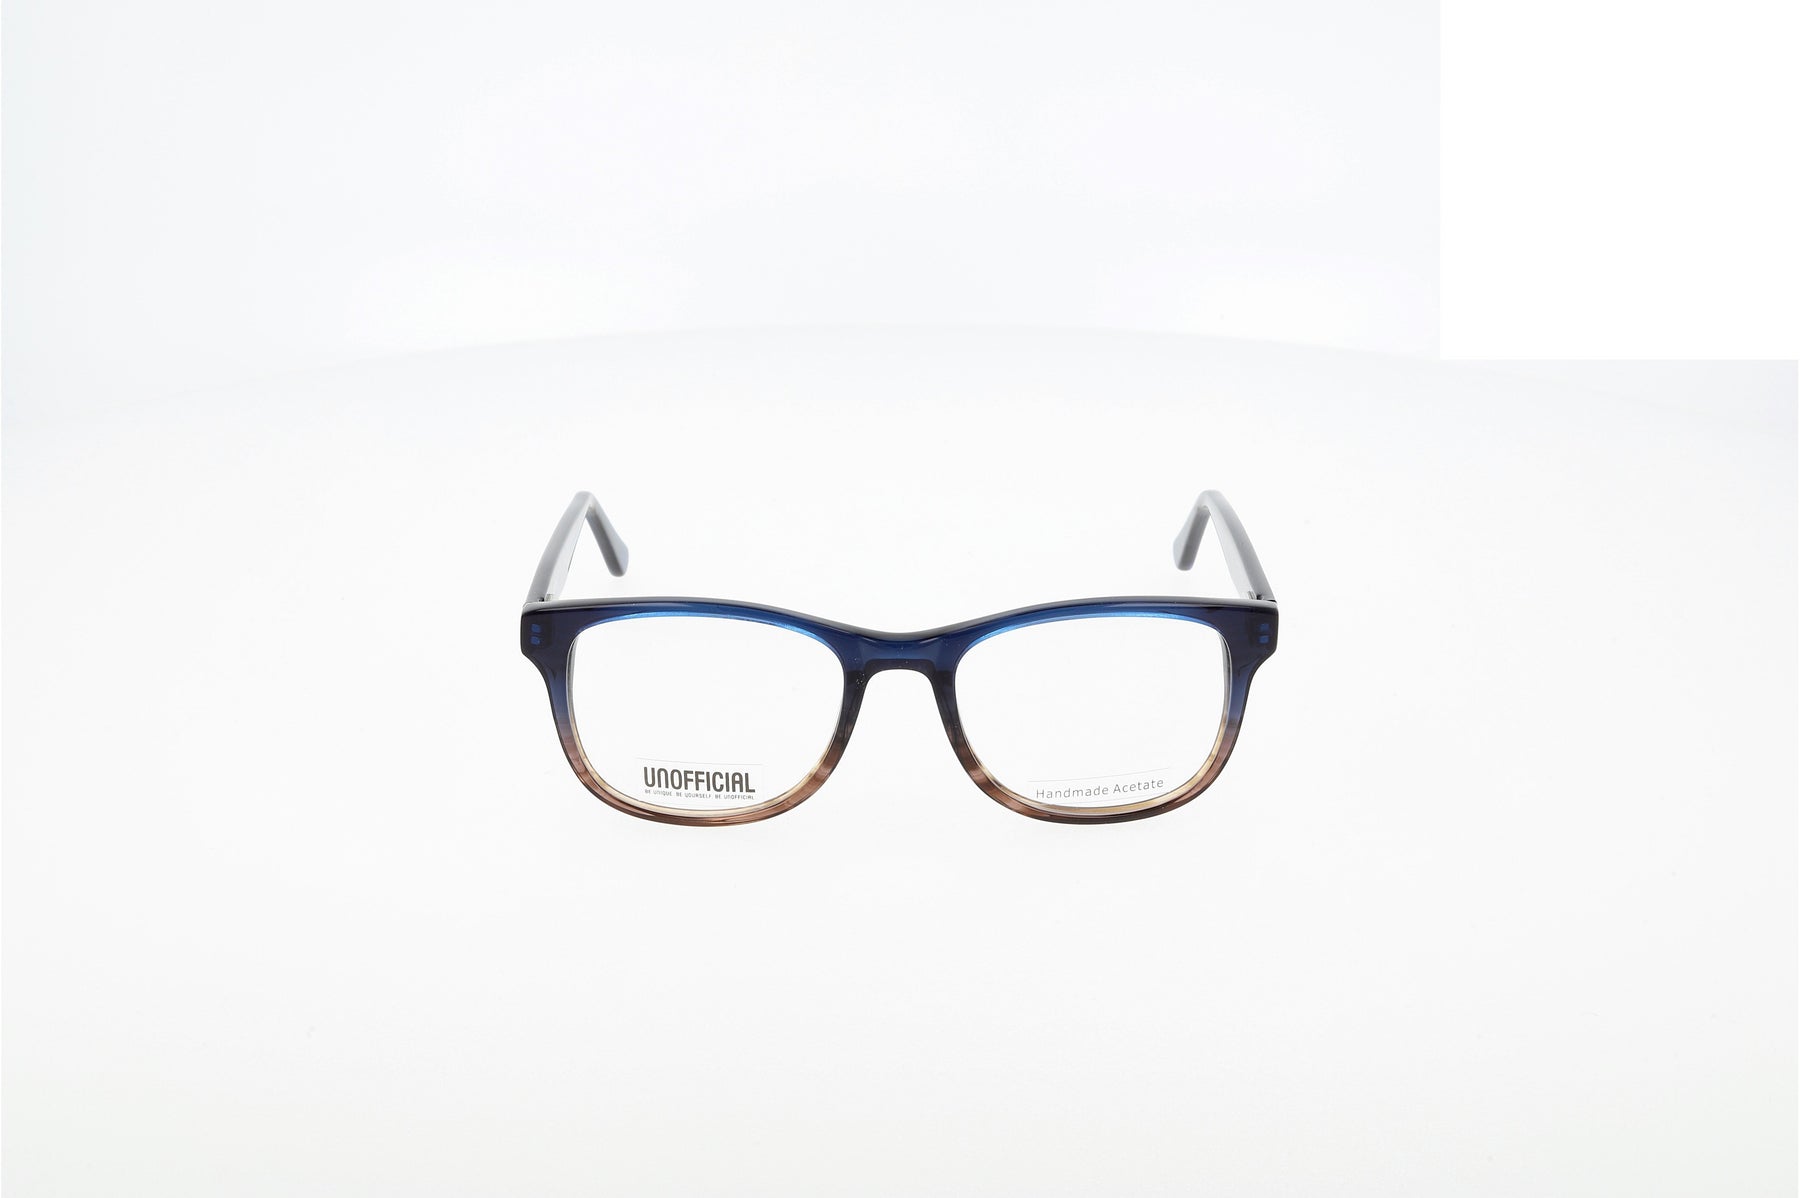 Vista-1 - Gafas oftálmicas Unofficial UNOM0011 Hombre Color Azul